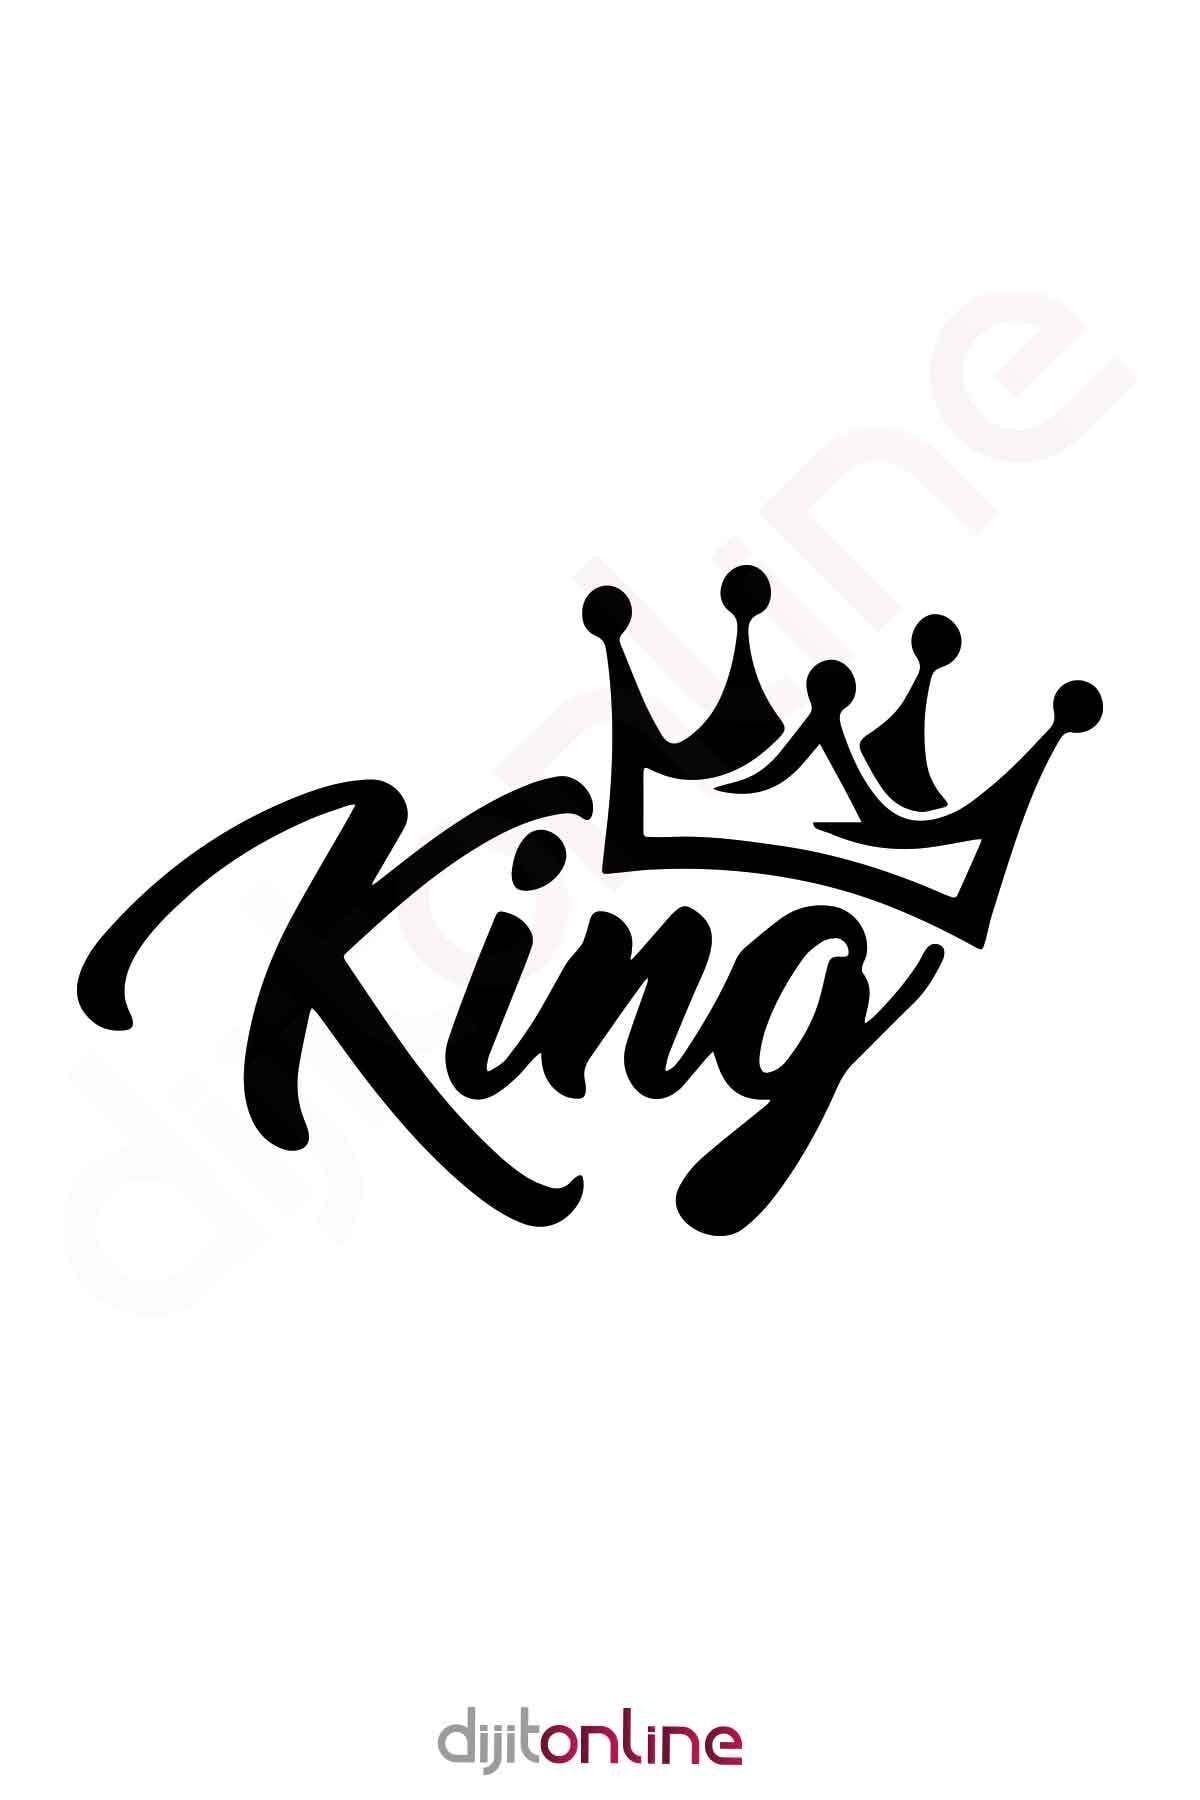 Dijitonline Kral Tacı King Oto Sticker Araba Cam Sticker 25x15cm